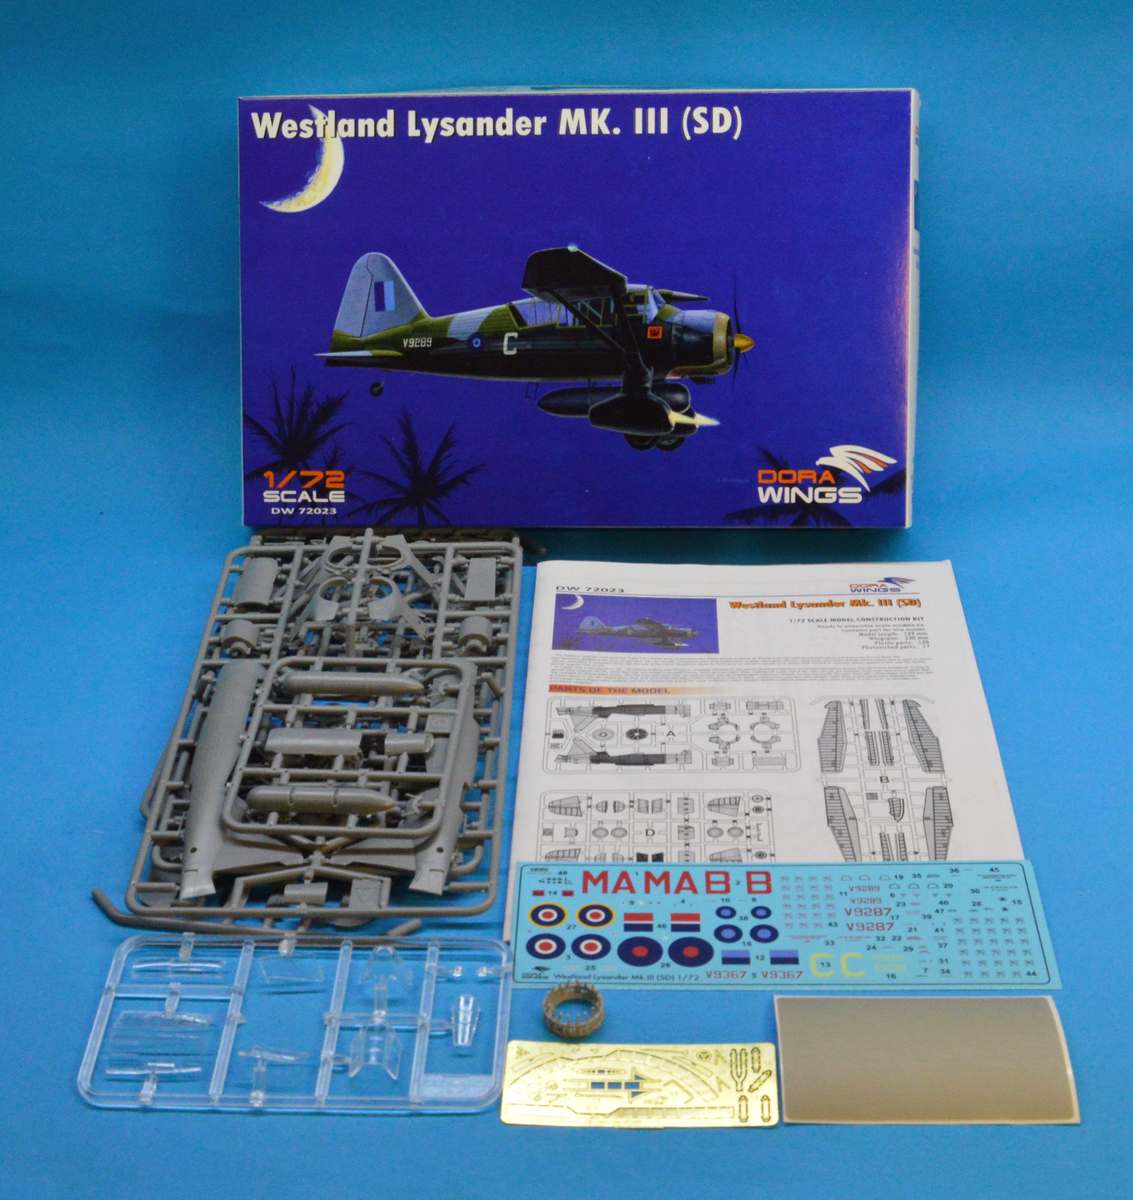 Westland Lysander Mk.III (SD). On sale